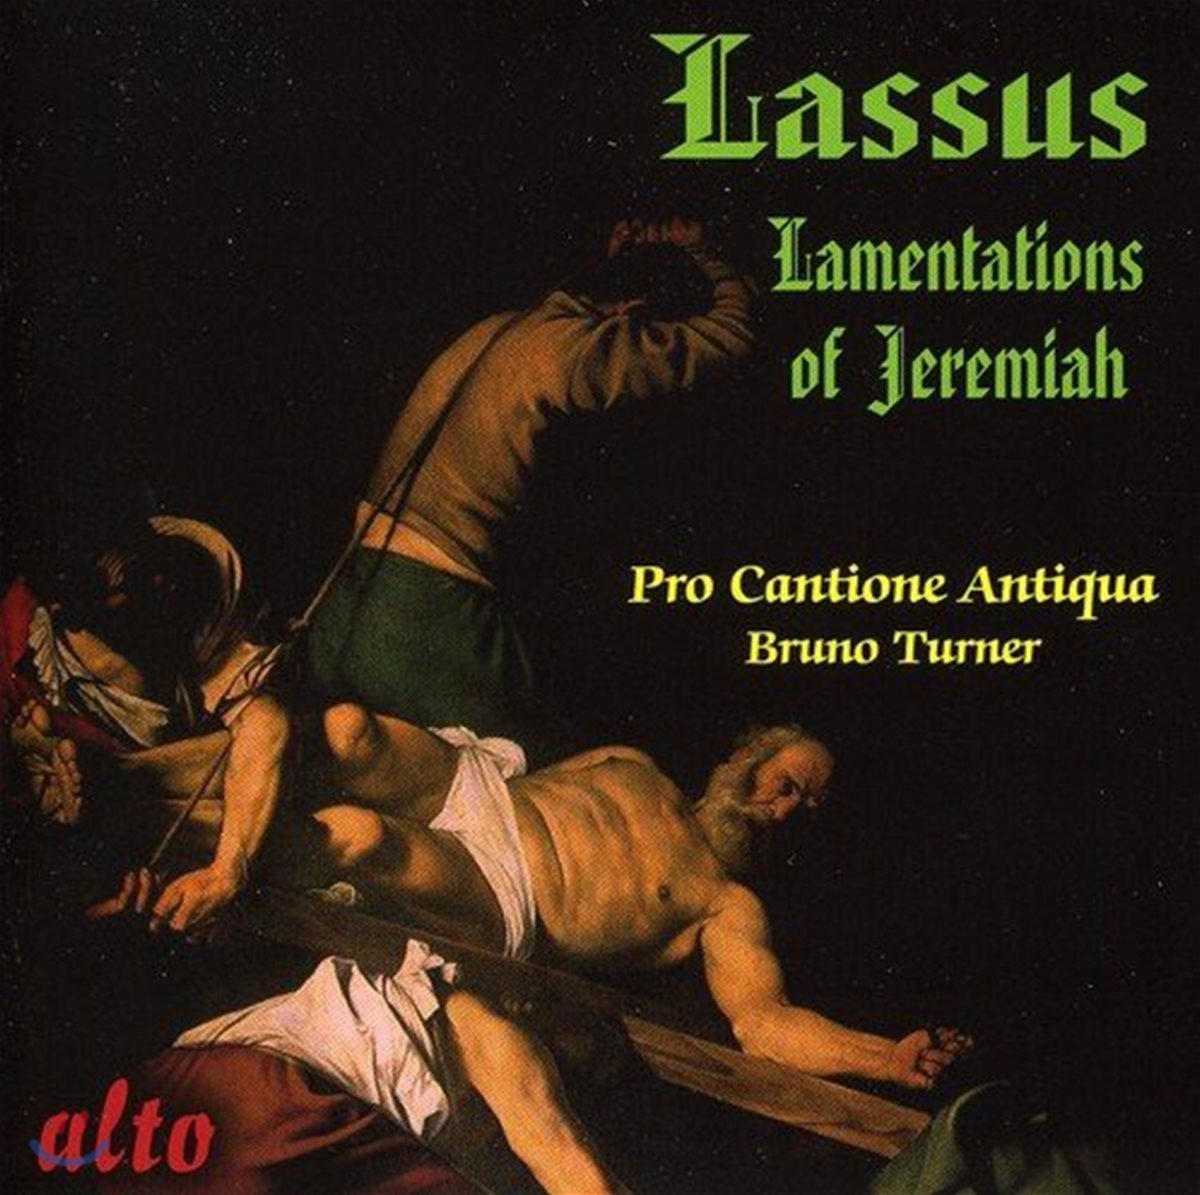 Pro Cantione Antiqua 라소: 예레미야 애가 - 프로 칸티오네 안티쿠아, 브루노 터너 (Orlando di Lasso [Lassus]: Lamentations of Jeremiah)